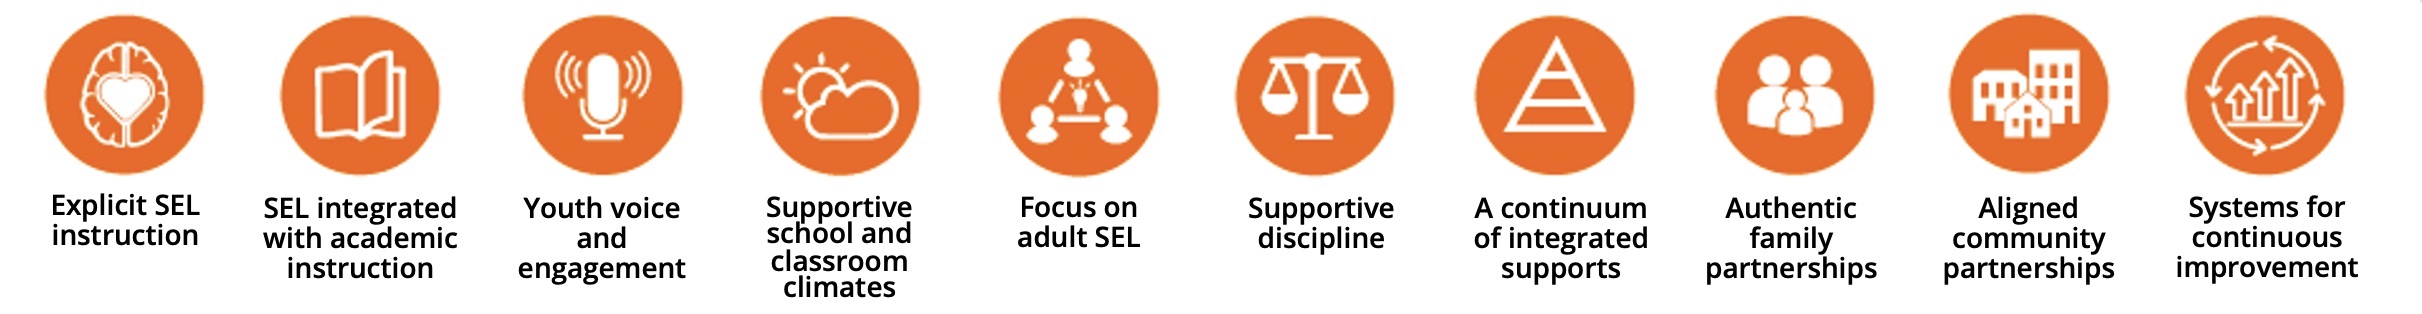 What is SEL? - Casel Schoolguide